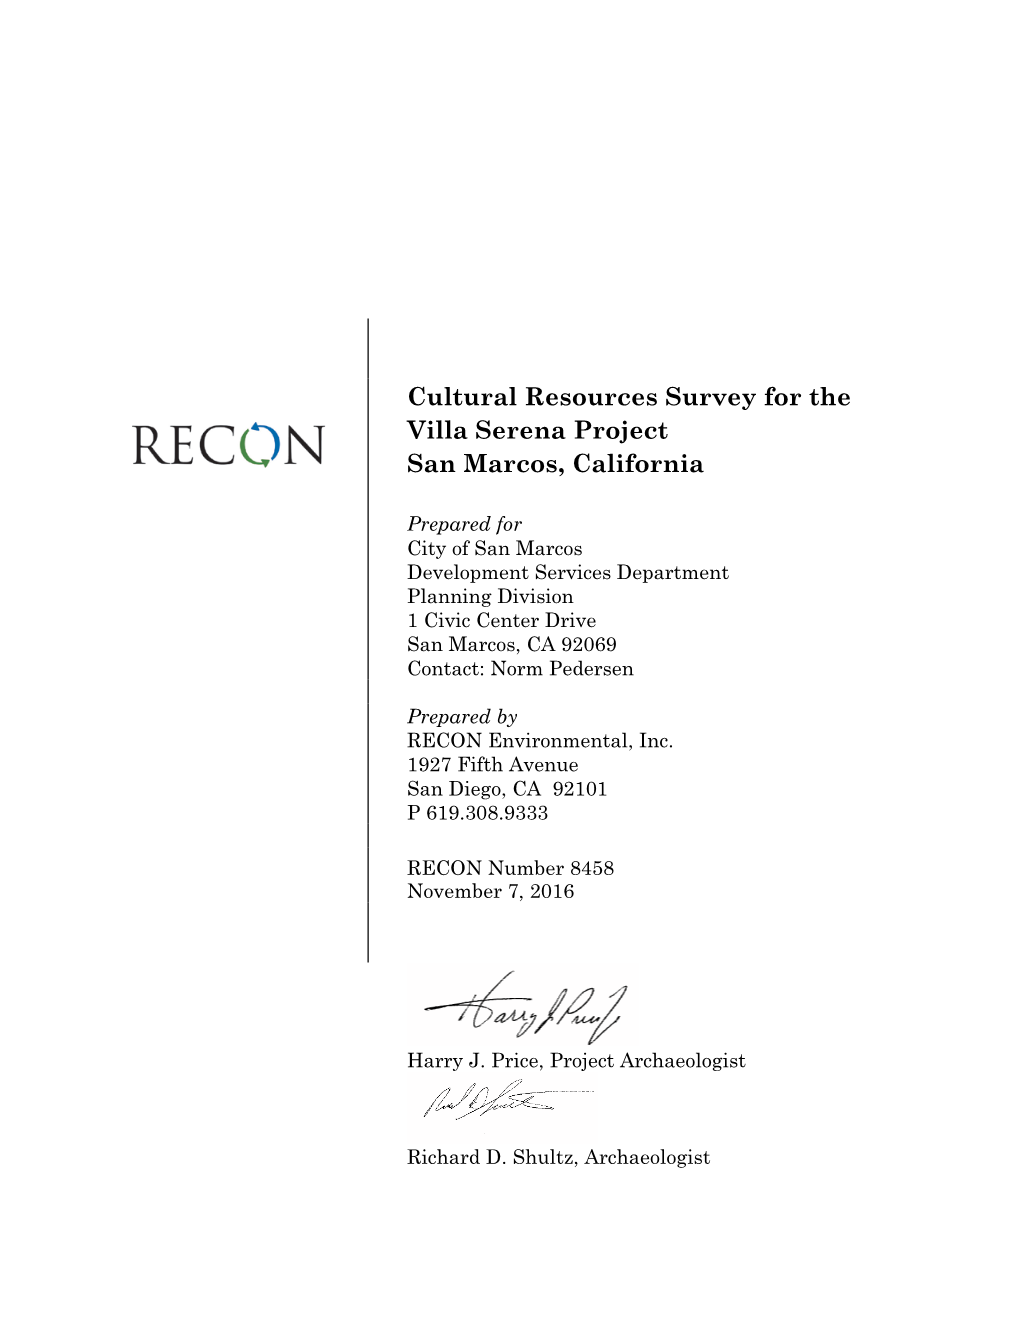 Cultural Resources Survey for the Villa Serena Project San Marcos, California